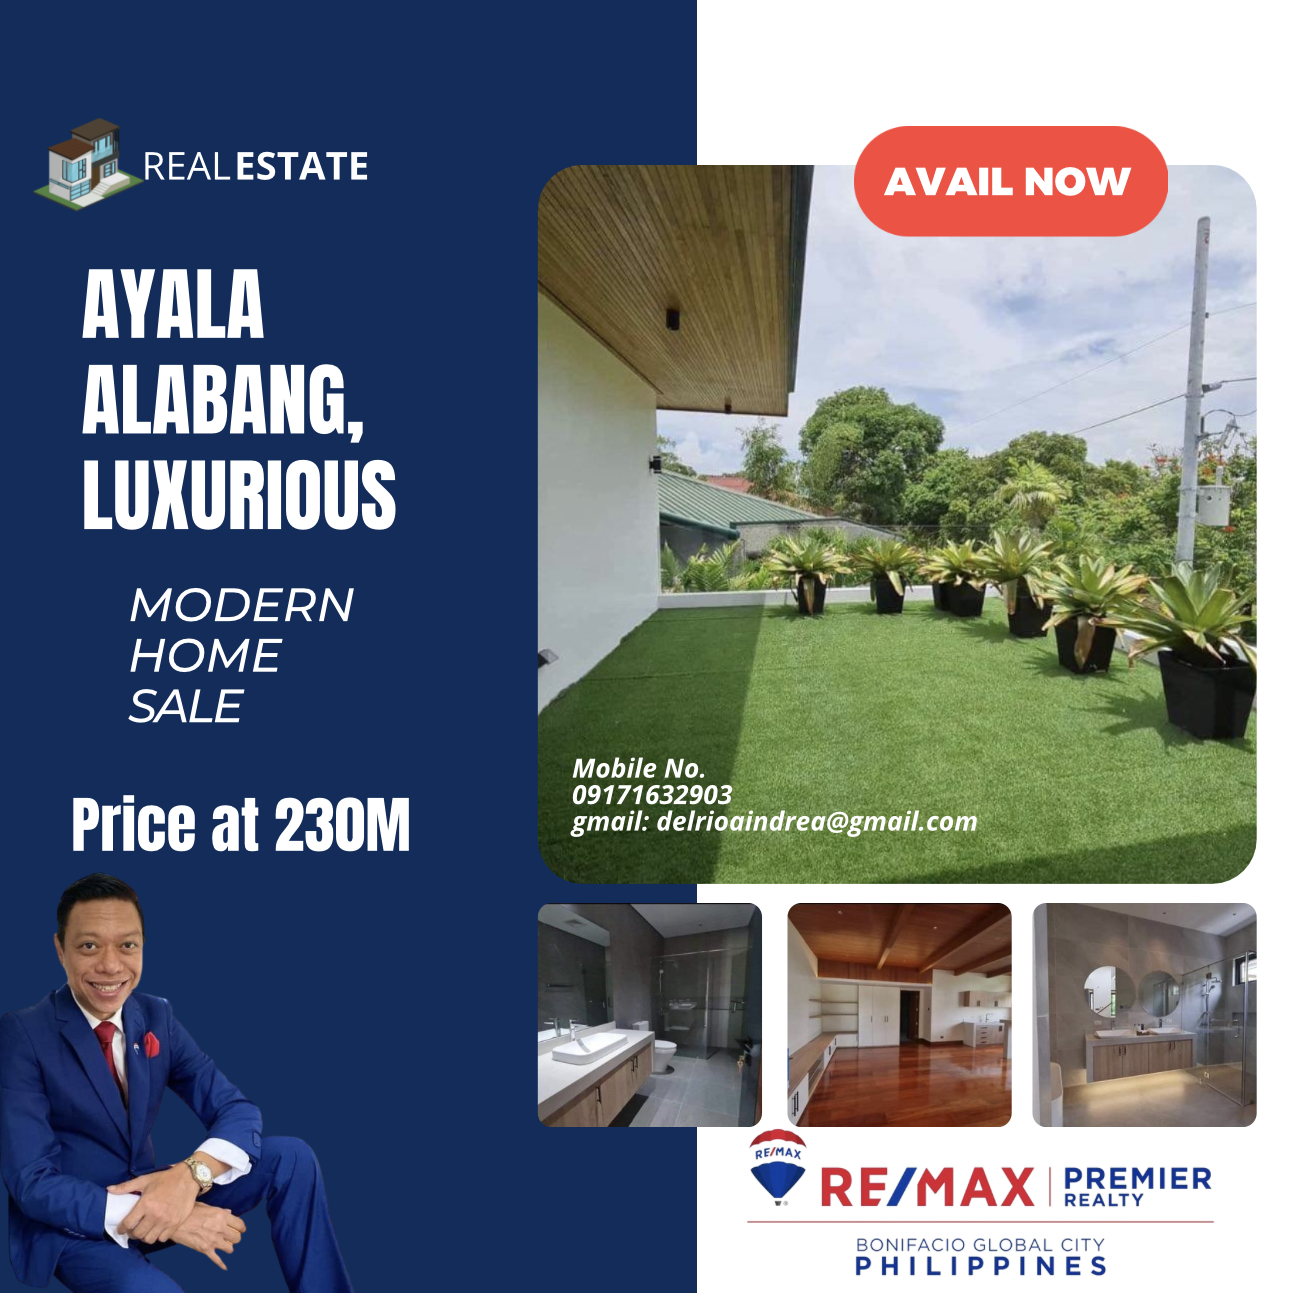 Ayala Alabang Luxurious Modern House for Sale‼️